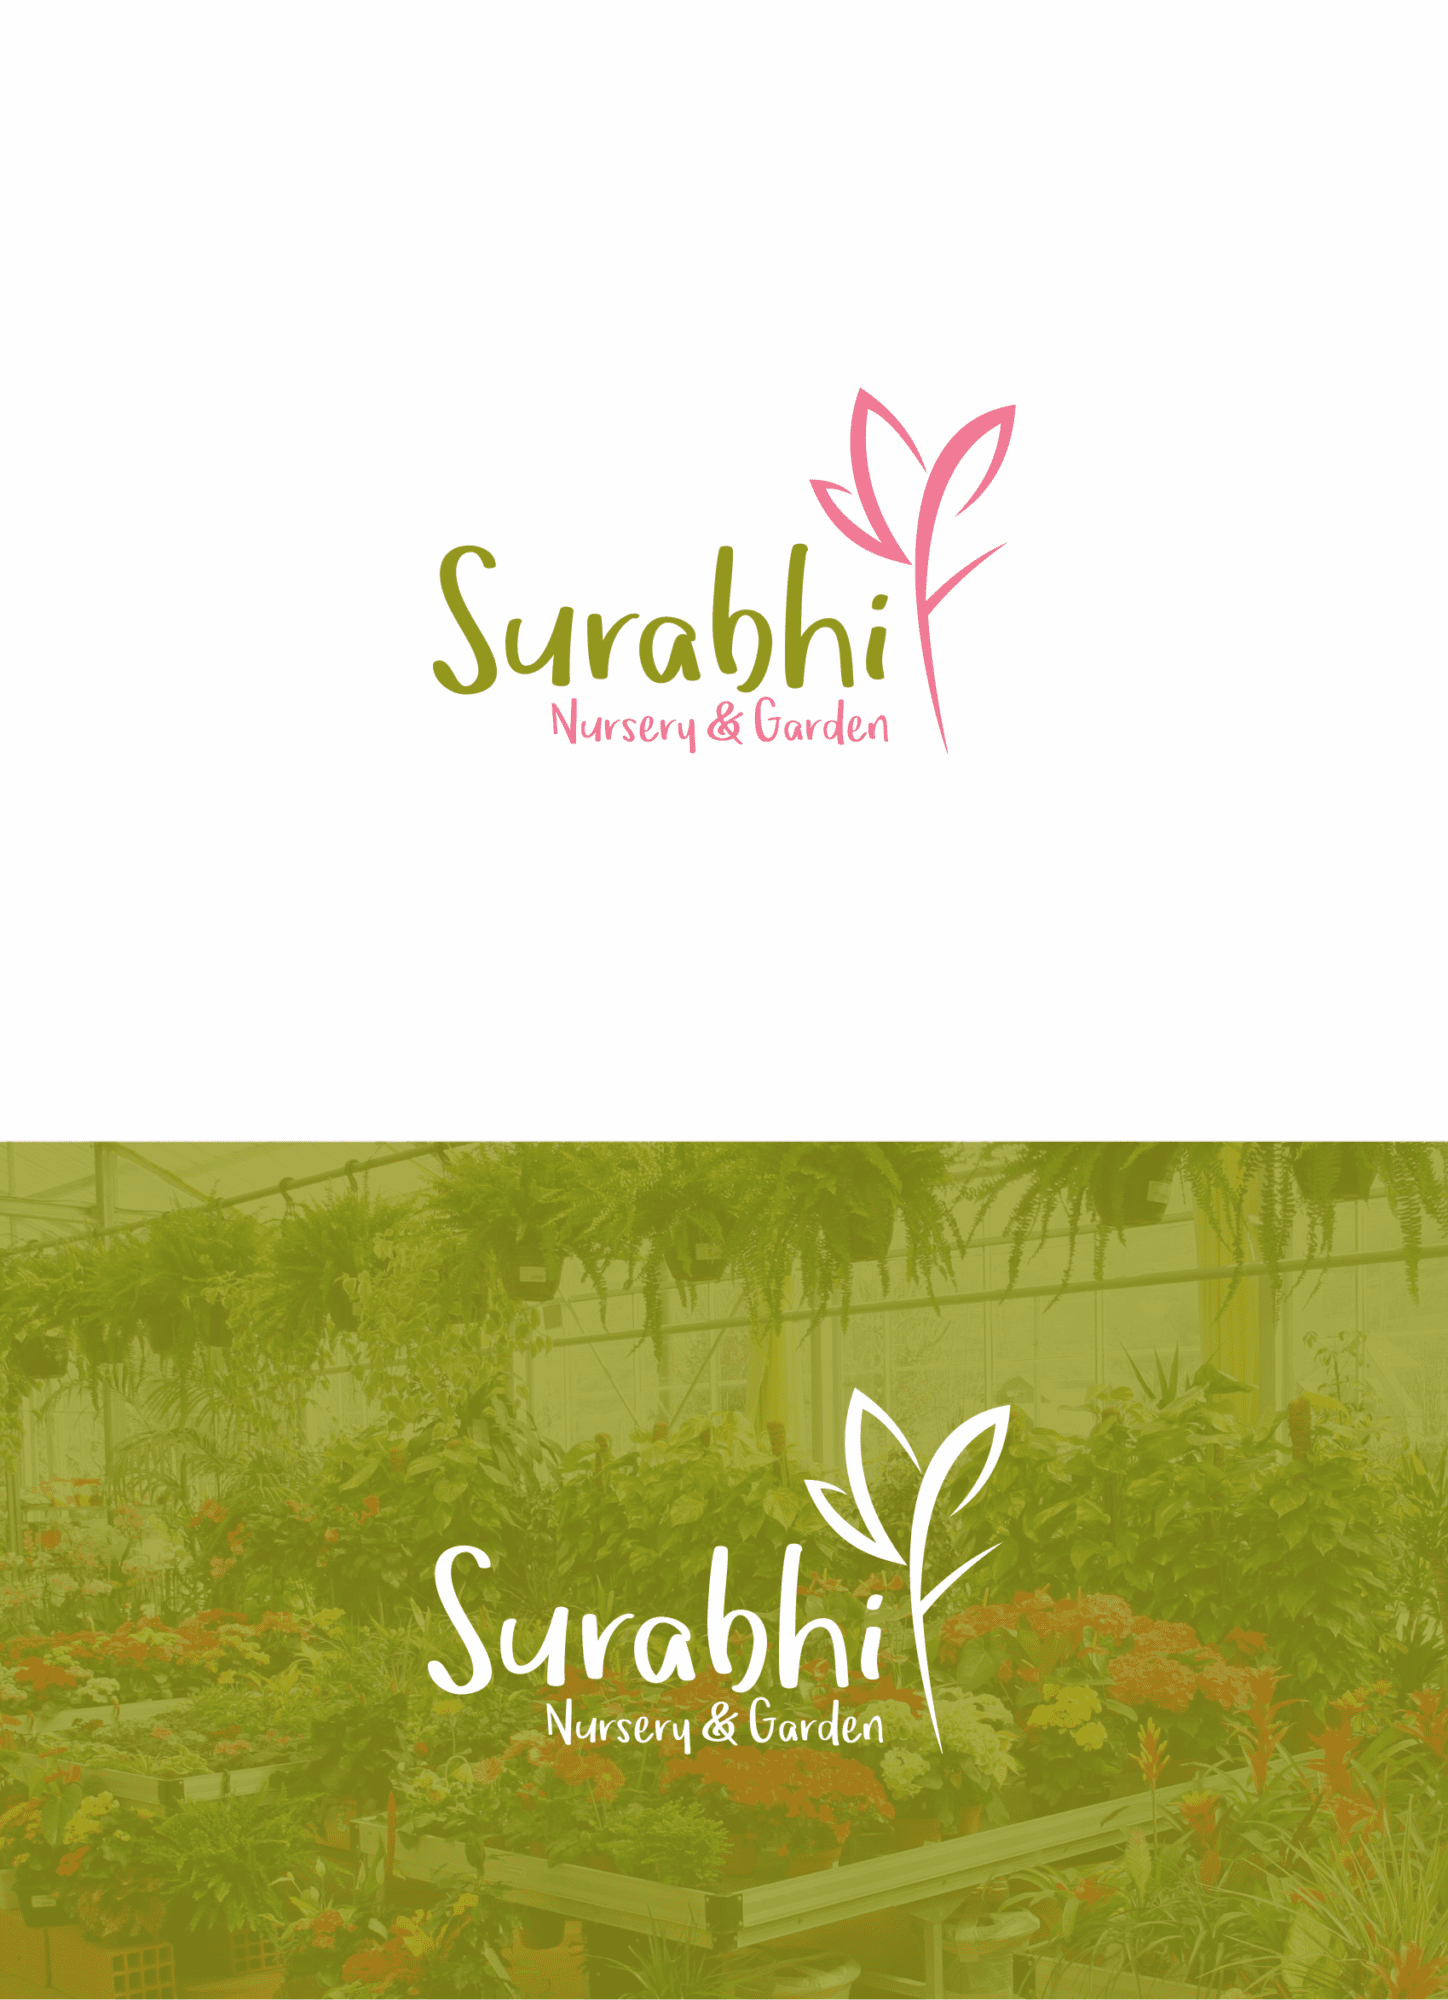 Surabhi Nursery and Garden Logo Branding & Packaging Design in Coimbatore by Violet Spark